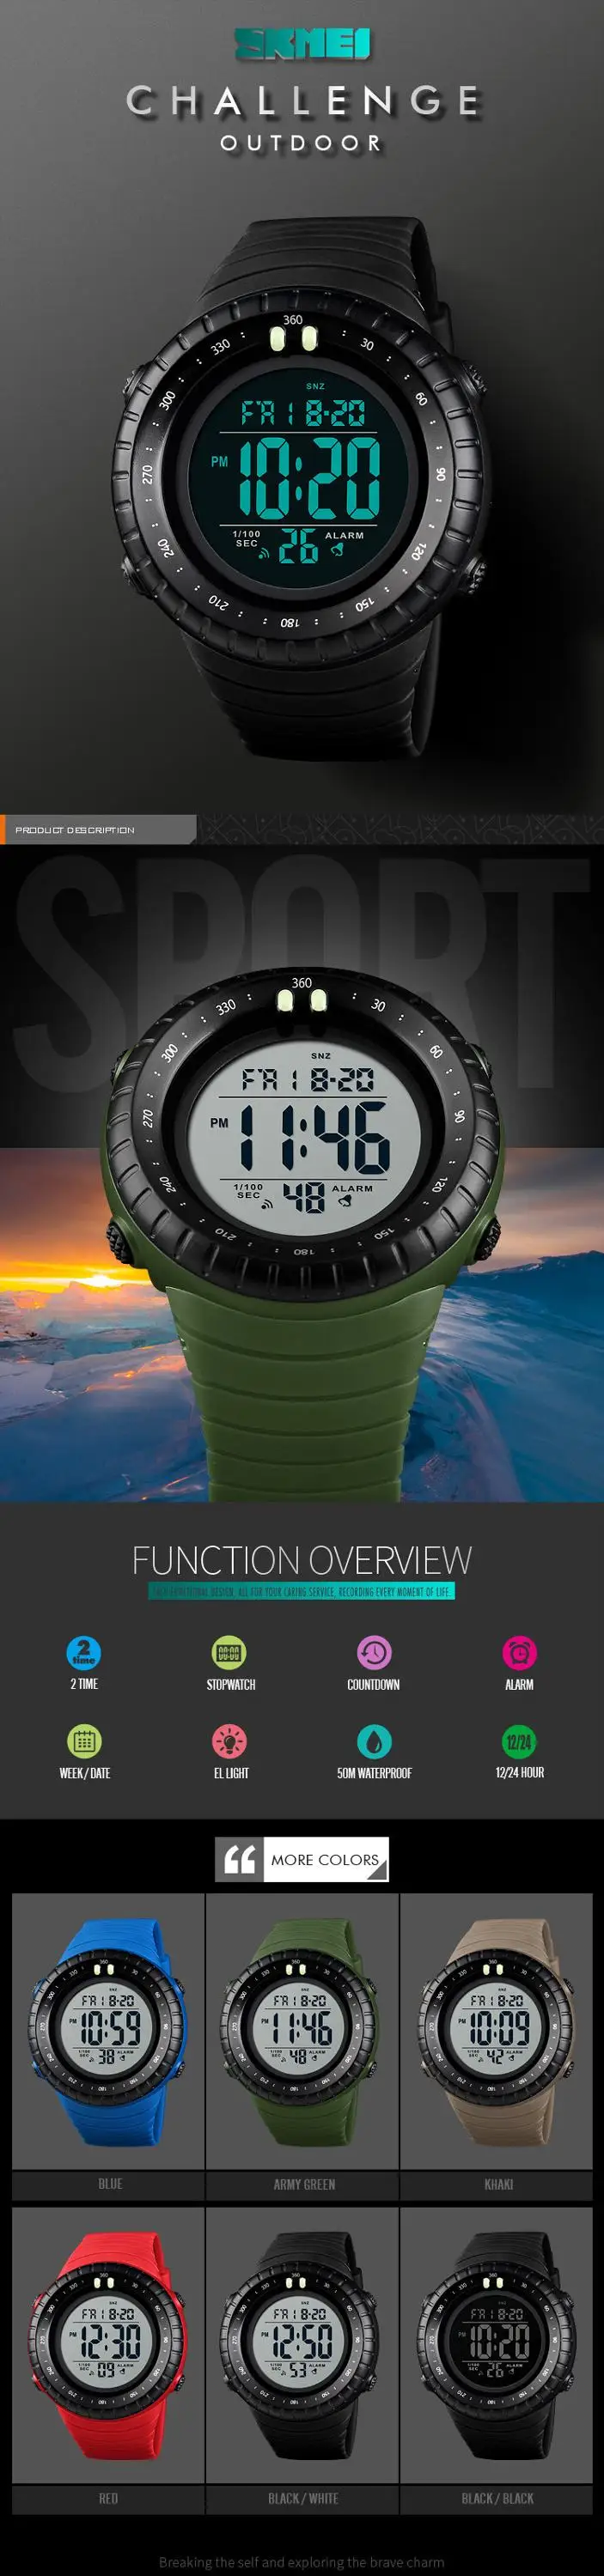 SKMEI 1420 Men's Led Digital Military Watches Outdoor Sports Waterproof Watch